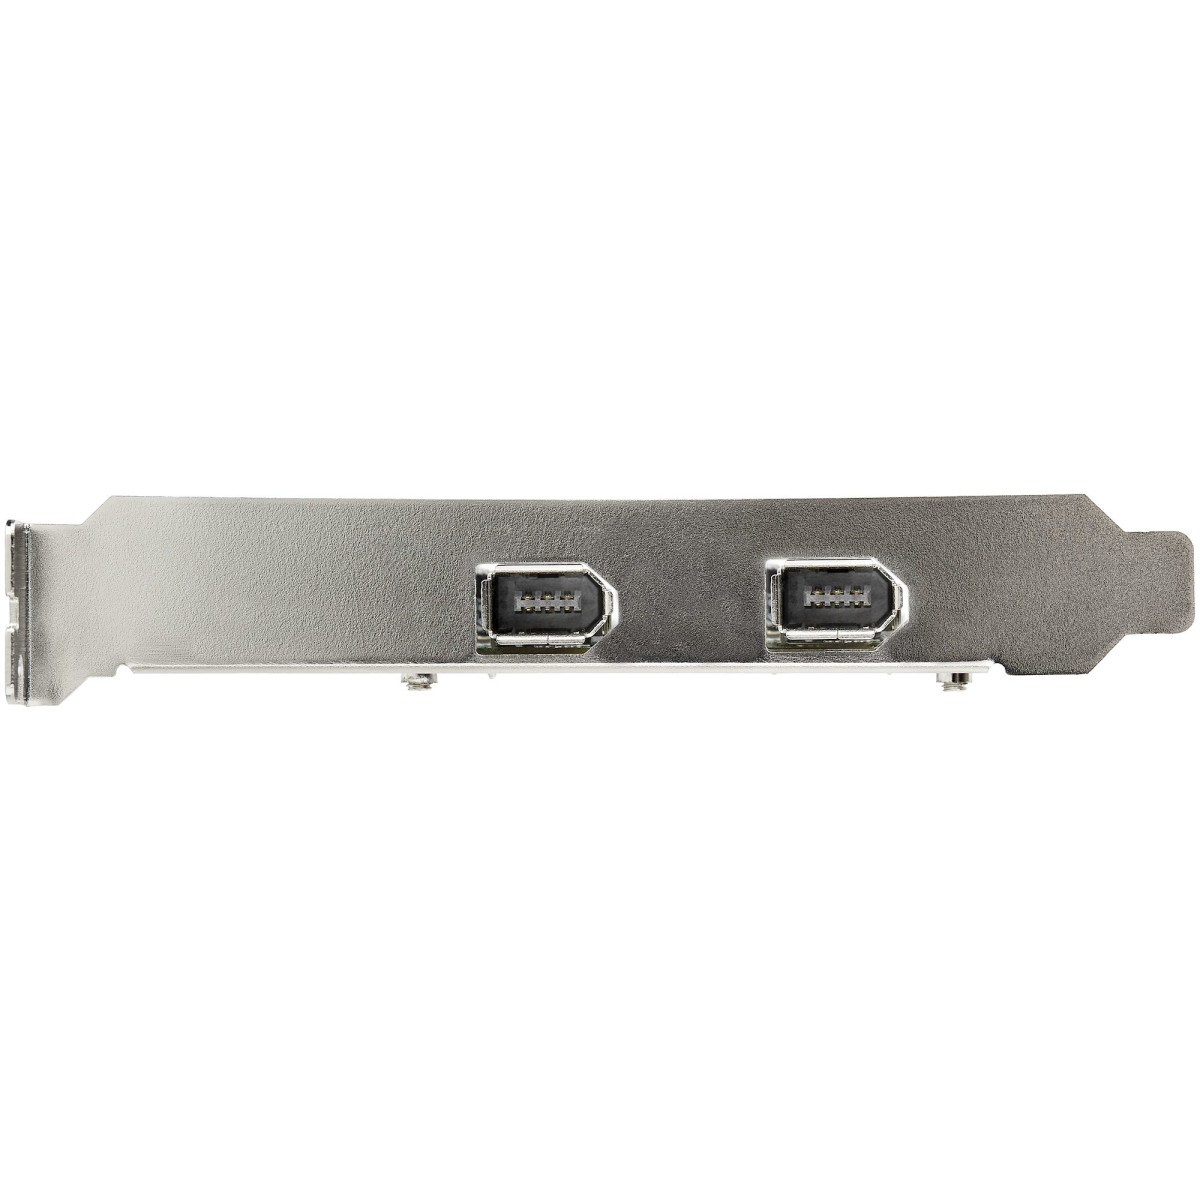 FireWire Card - PCIe FireWire - 2 Port